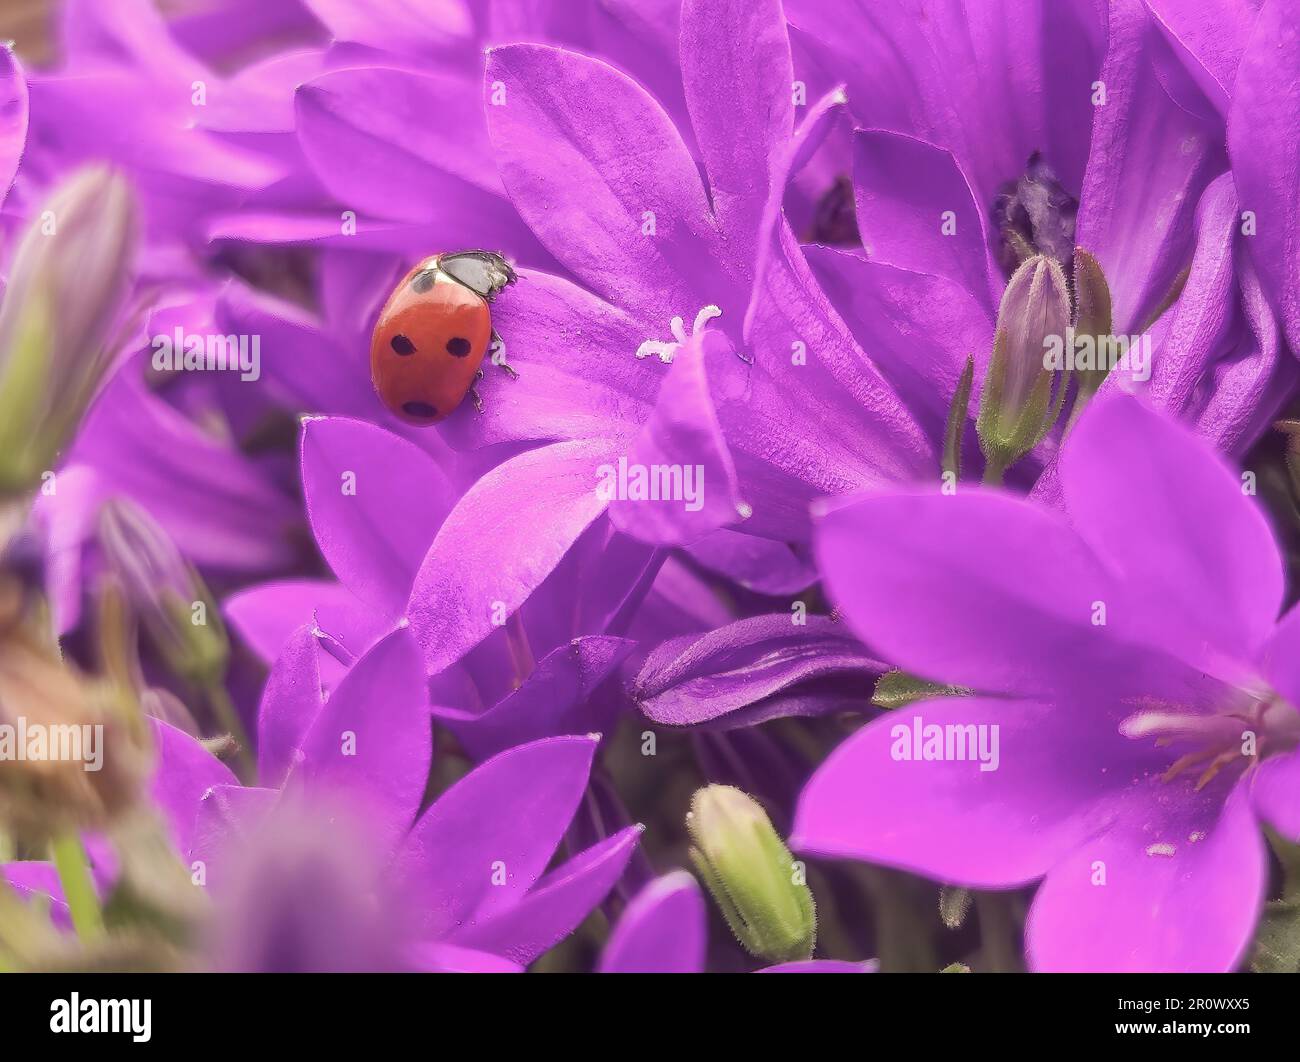 Love Bug on a purple plant. Stock Photo